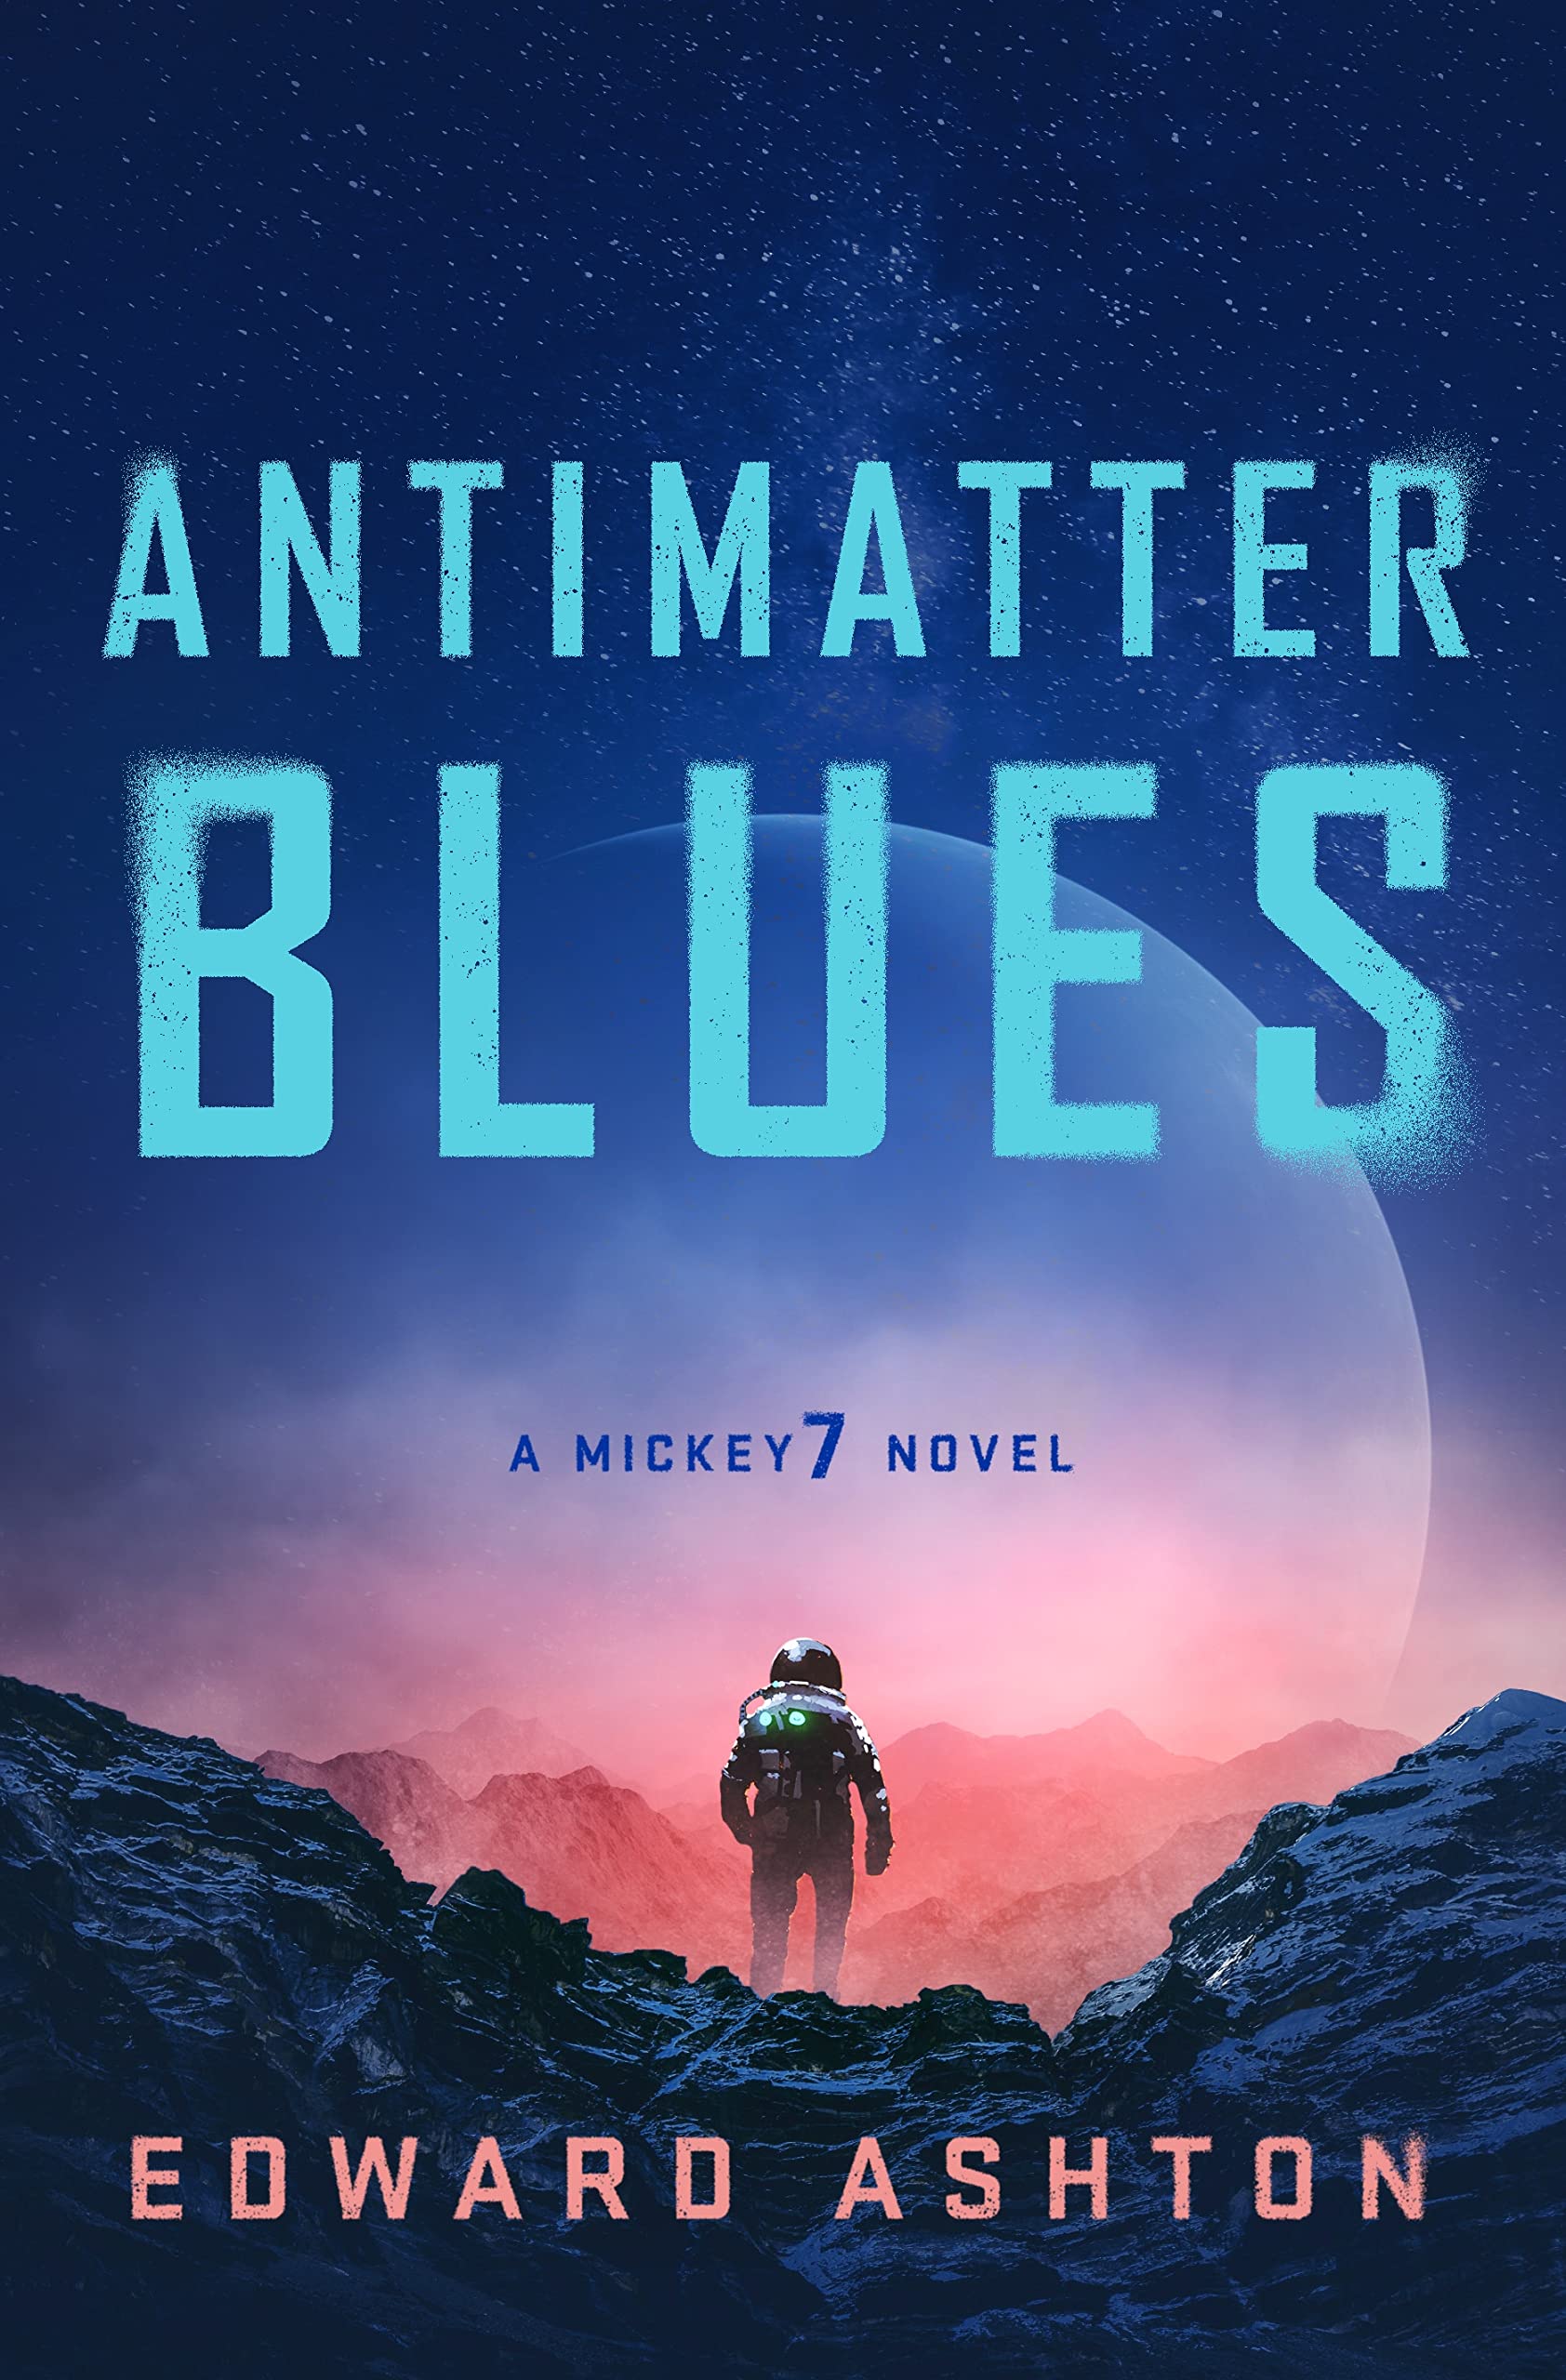  Image for "Antimatter Blues"